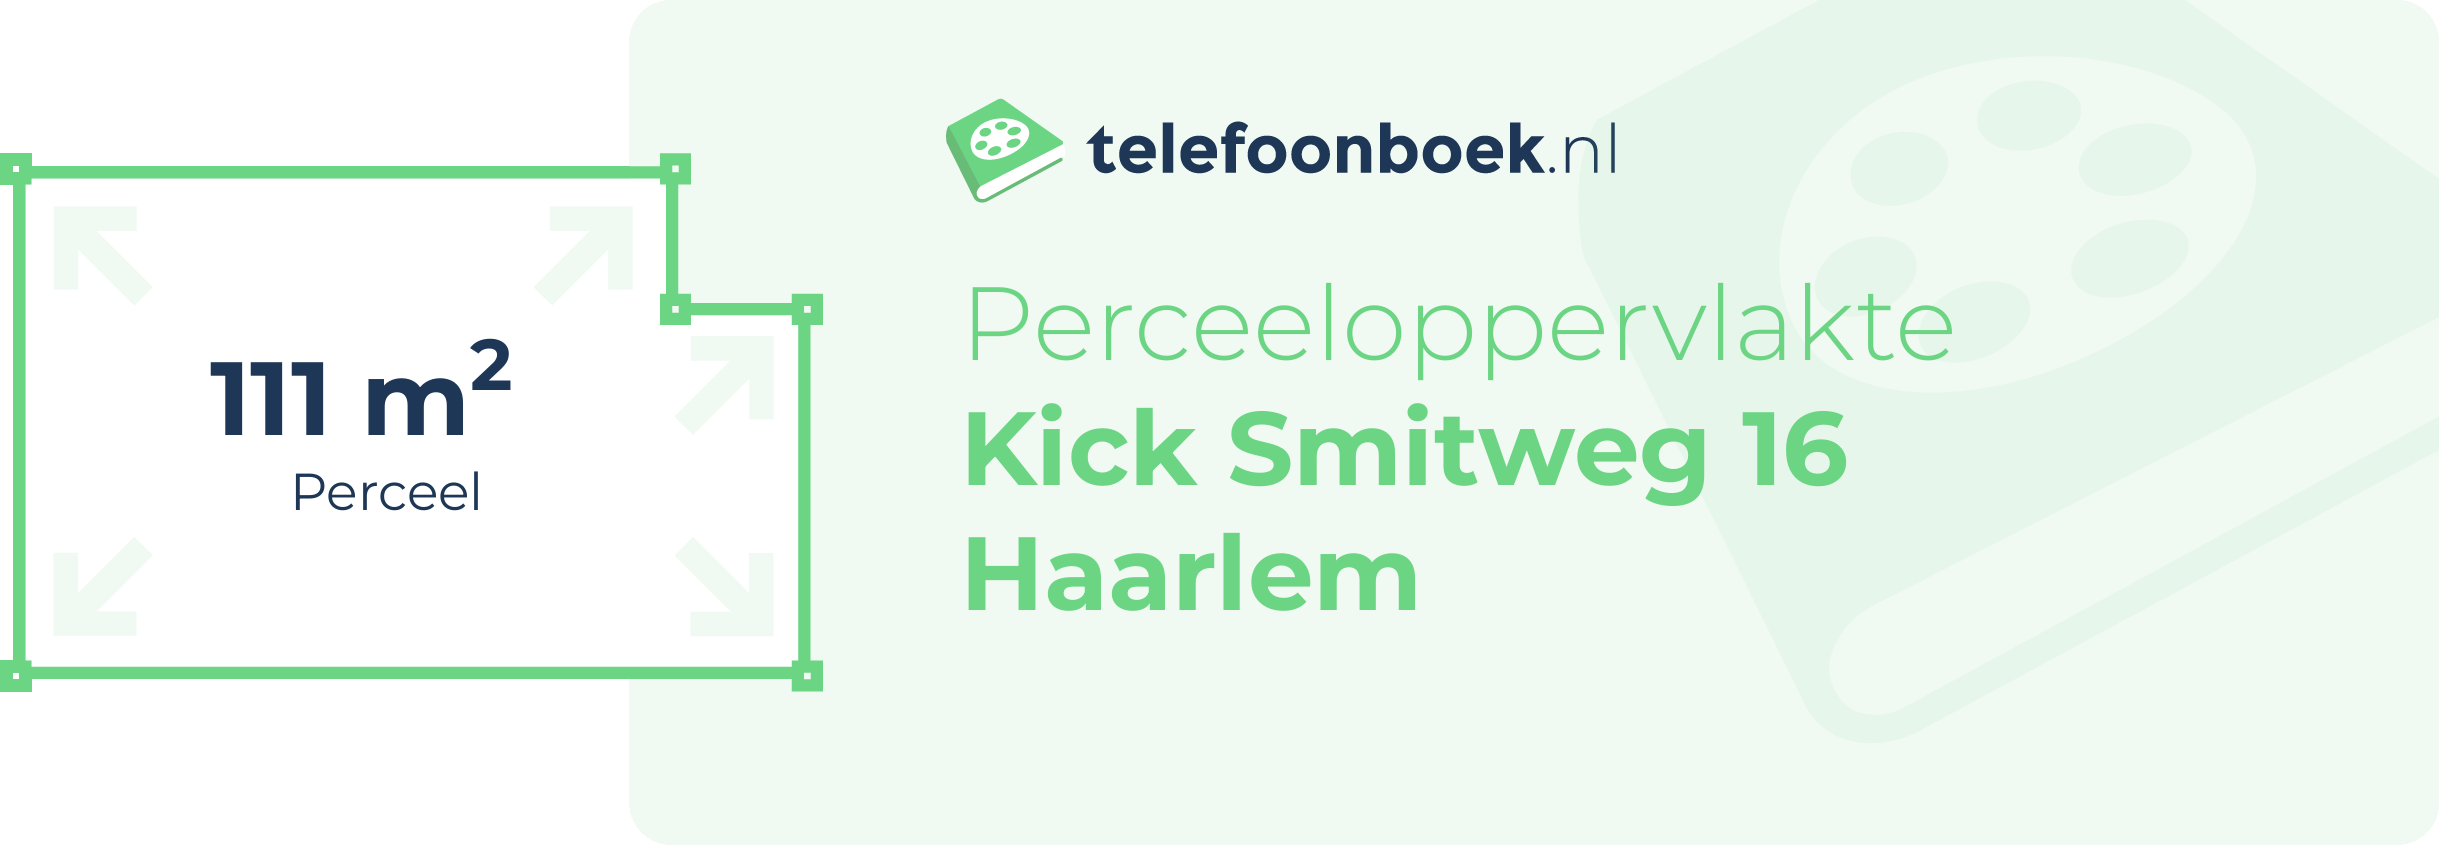 Perceeloppervlakte Kick Smitweg 16 Haarlem